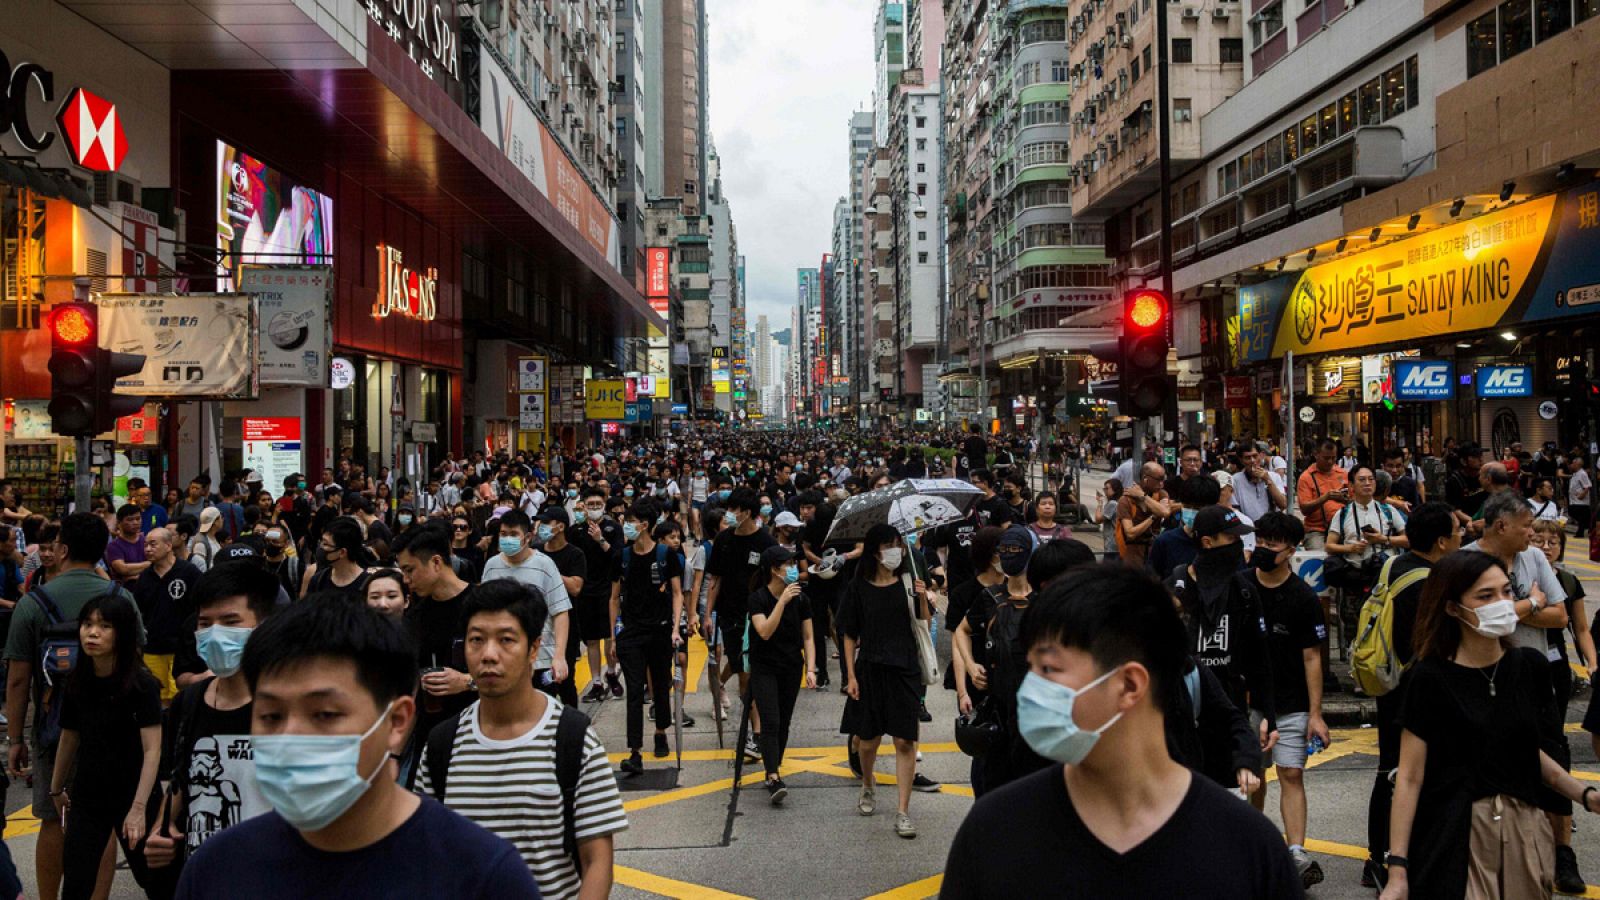 Los manifestantes recorren una calle comercial de Hong Kong